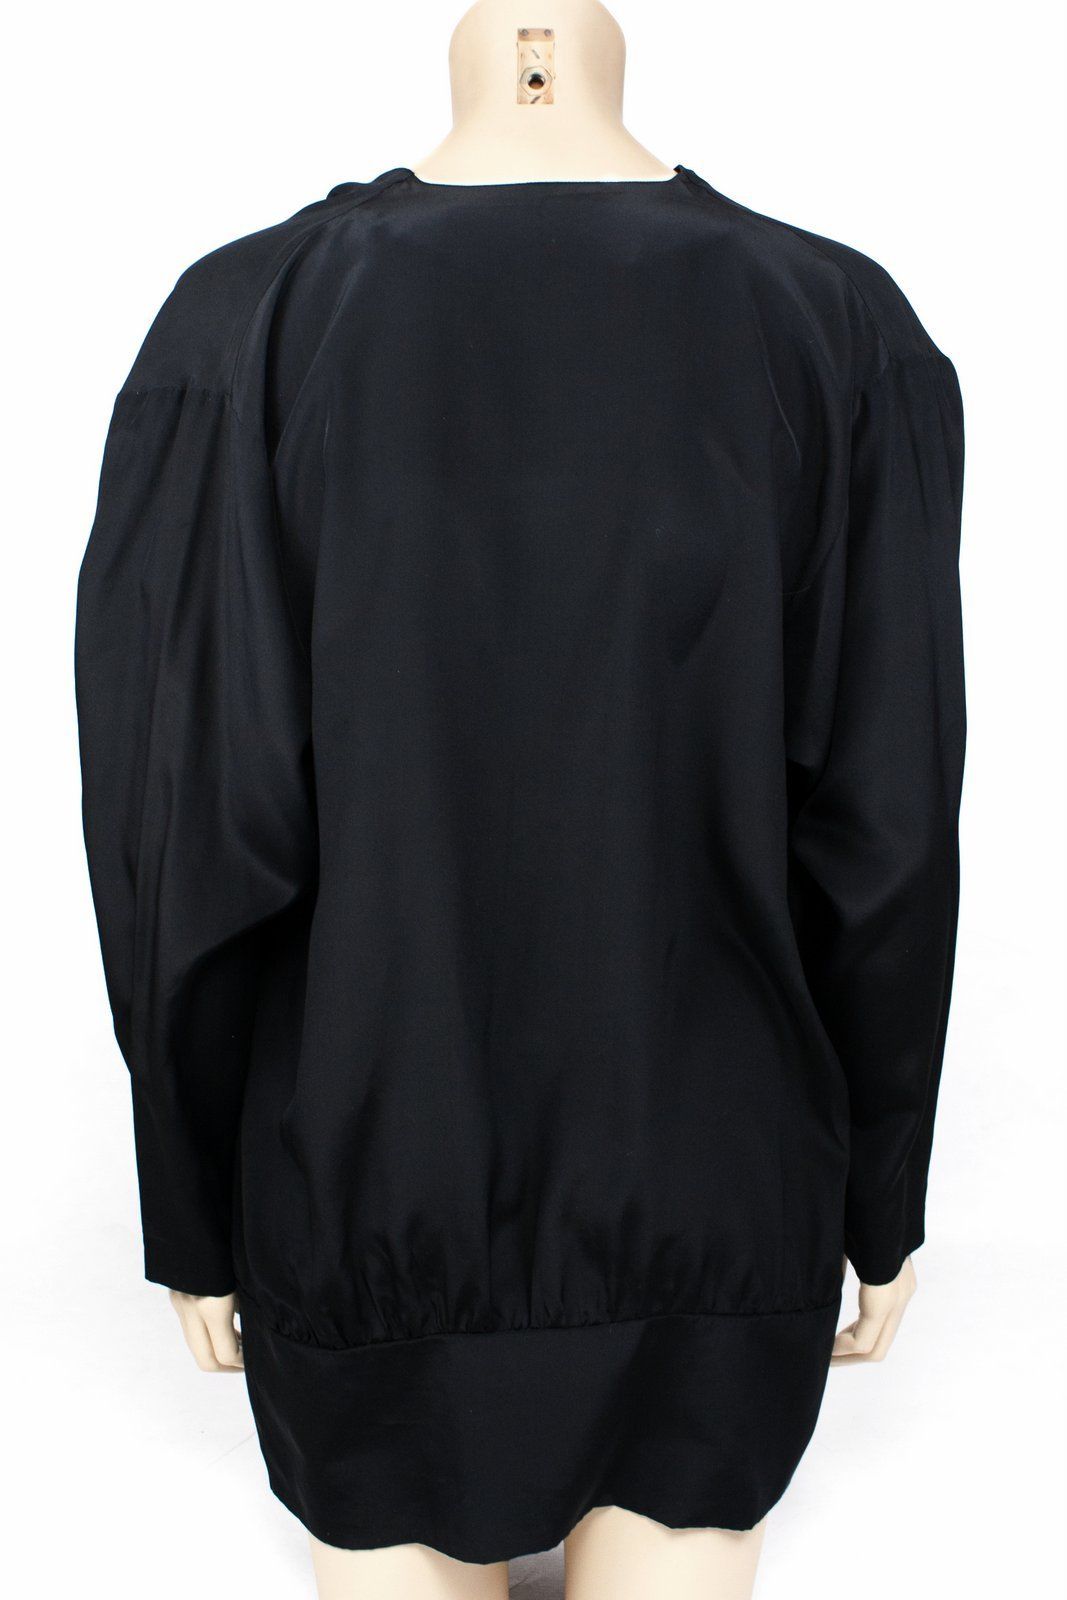 MARIMEKKO Charcoal Black Silk Tunic/Blouse, UK 12/EU 38/US 10, Medium - secondfirst